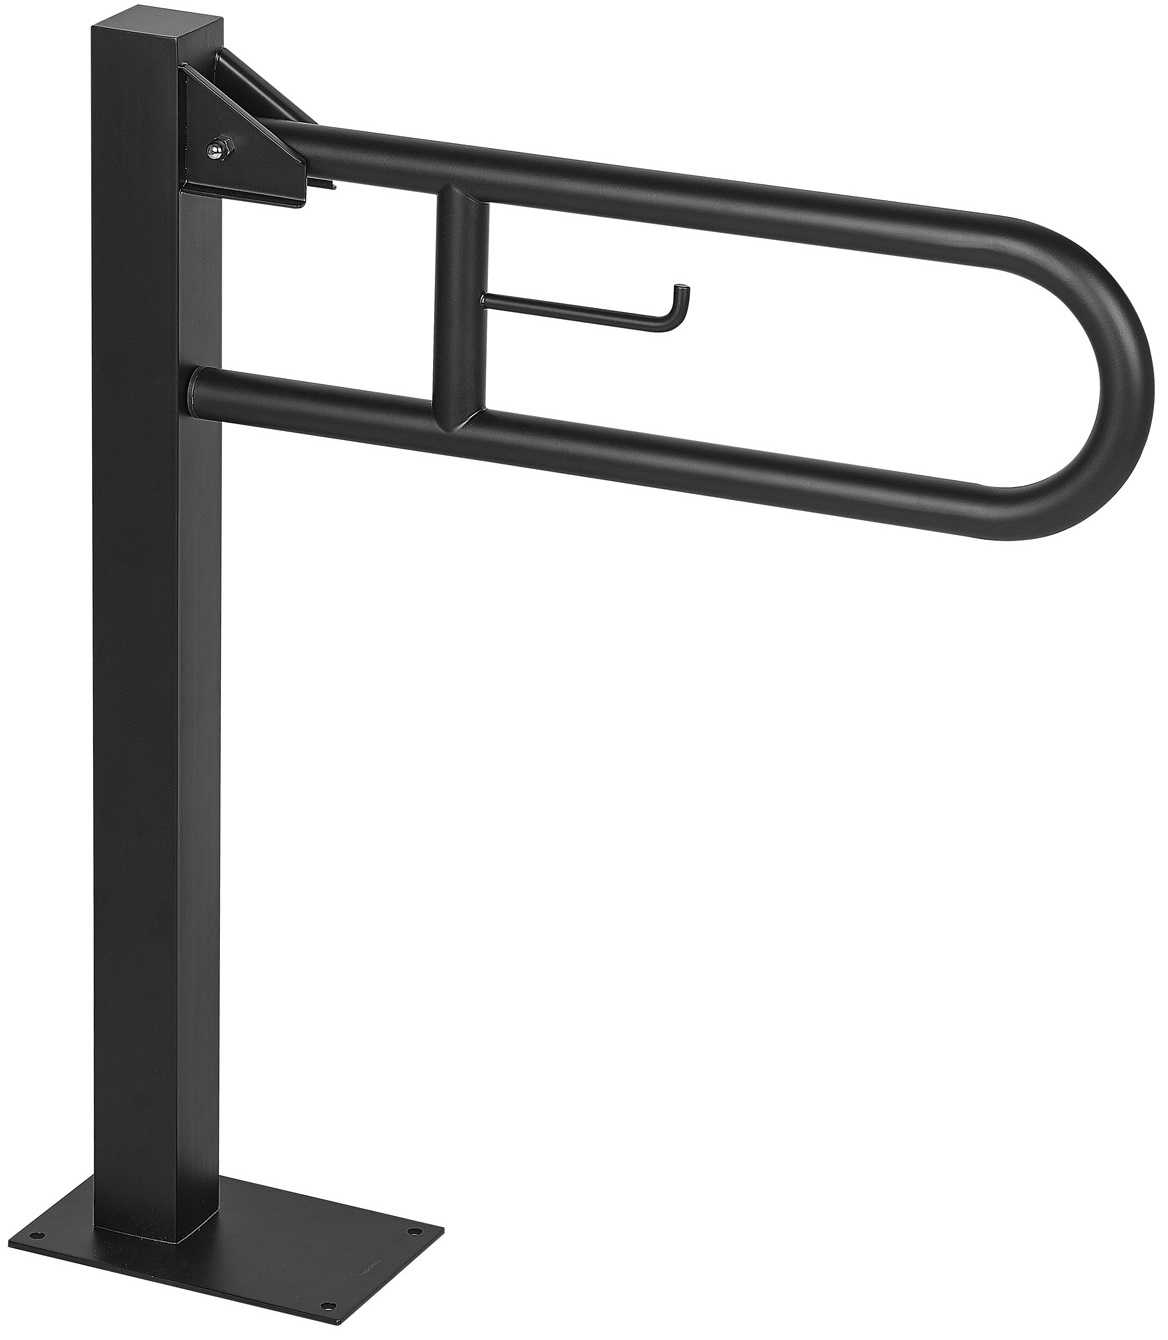 Vertical swing grab bar on fixed column